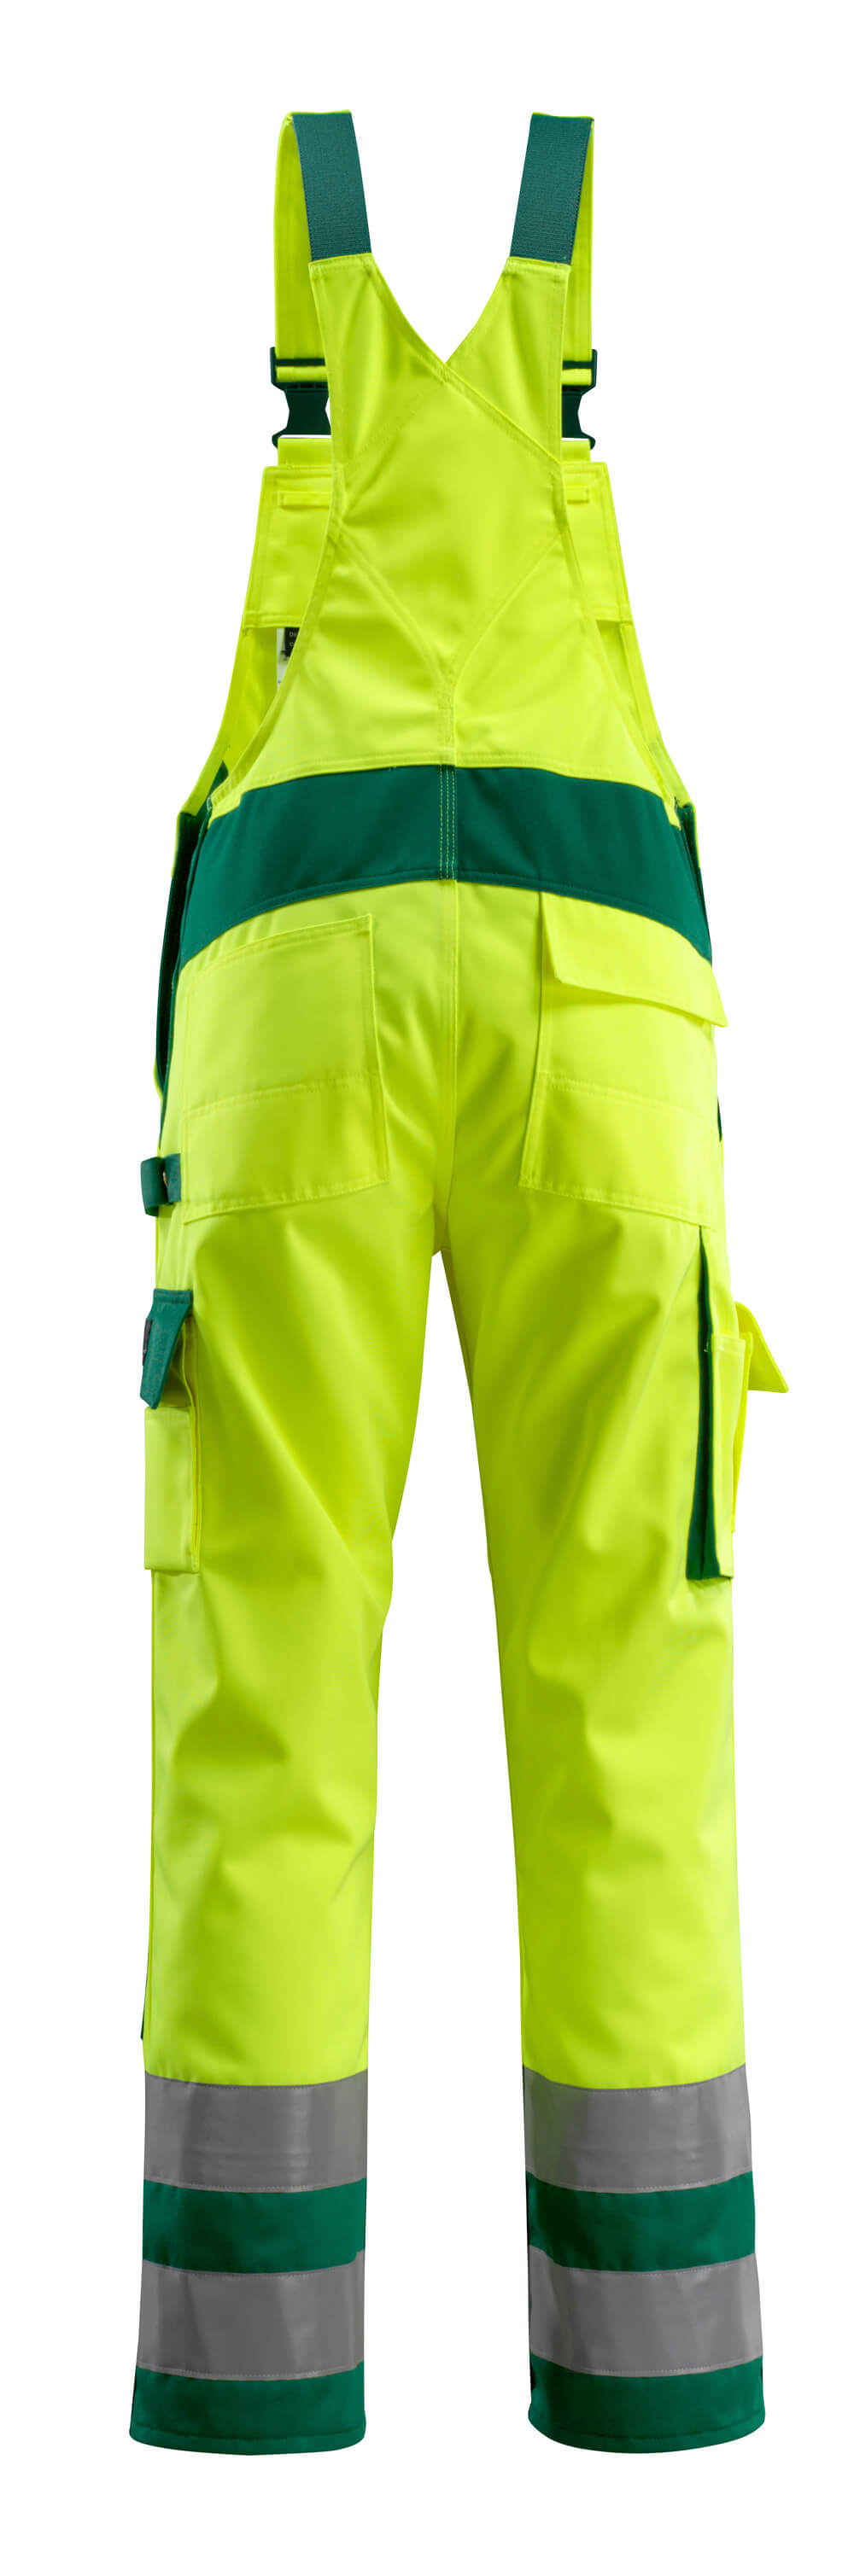 Mascot SAFE COMPETE  Barras Bib & Brace with kneepad pockets 07169 hi-vis yellow/green